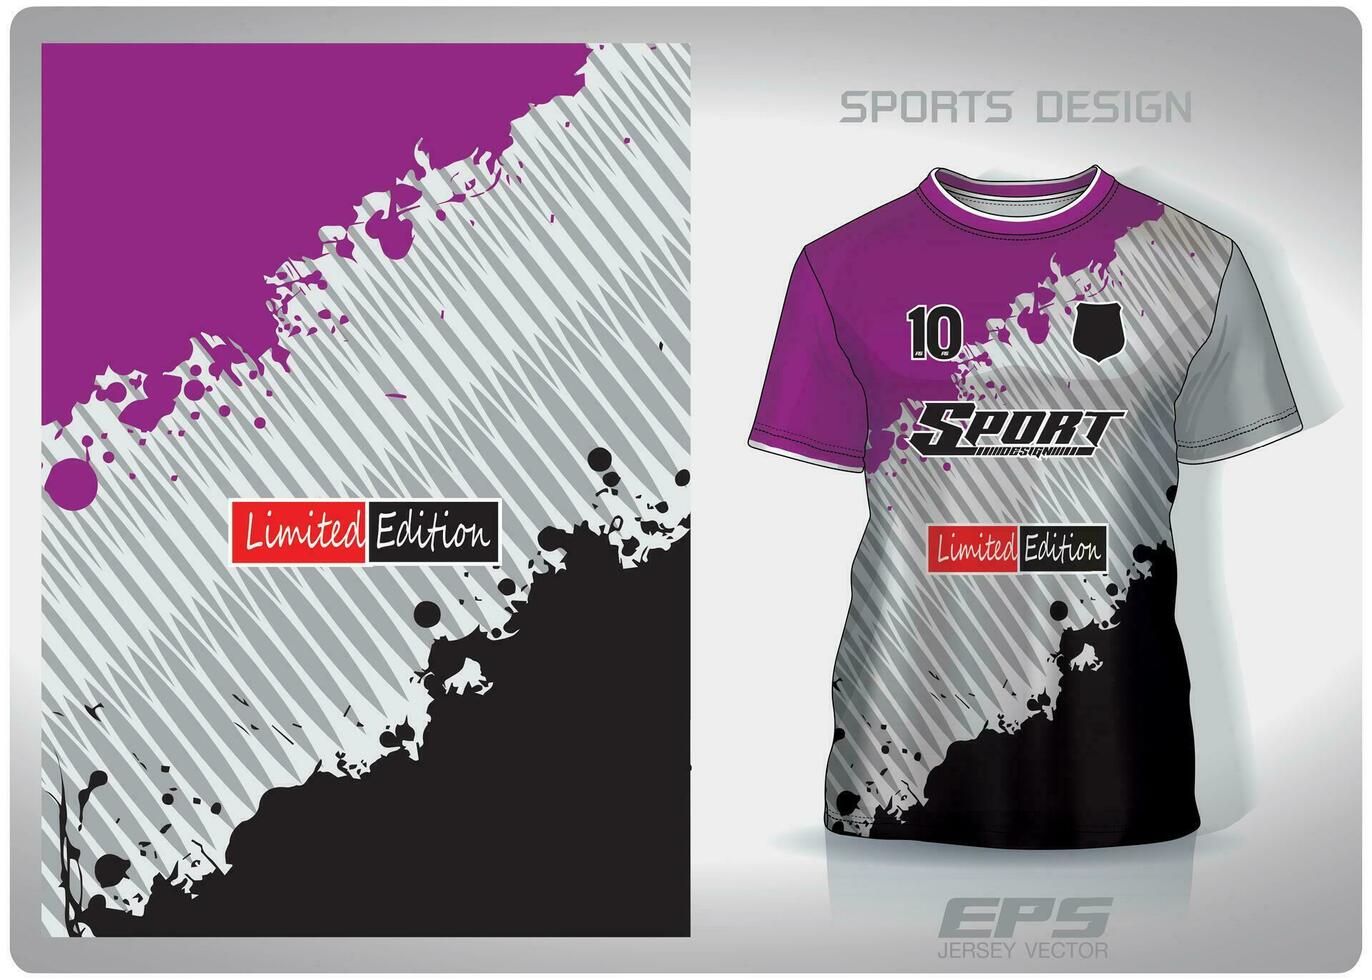 vector Deportes camisa antecedentes imagen.negro púrpura ensalada cepillo peine modelo diseño, ilustración, textil antecedentes para Deportes camiseta, fútbol americano jersey camisa